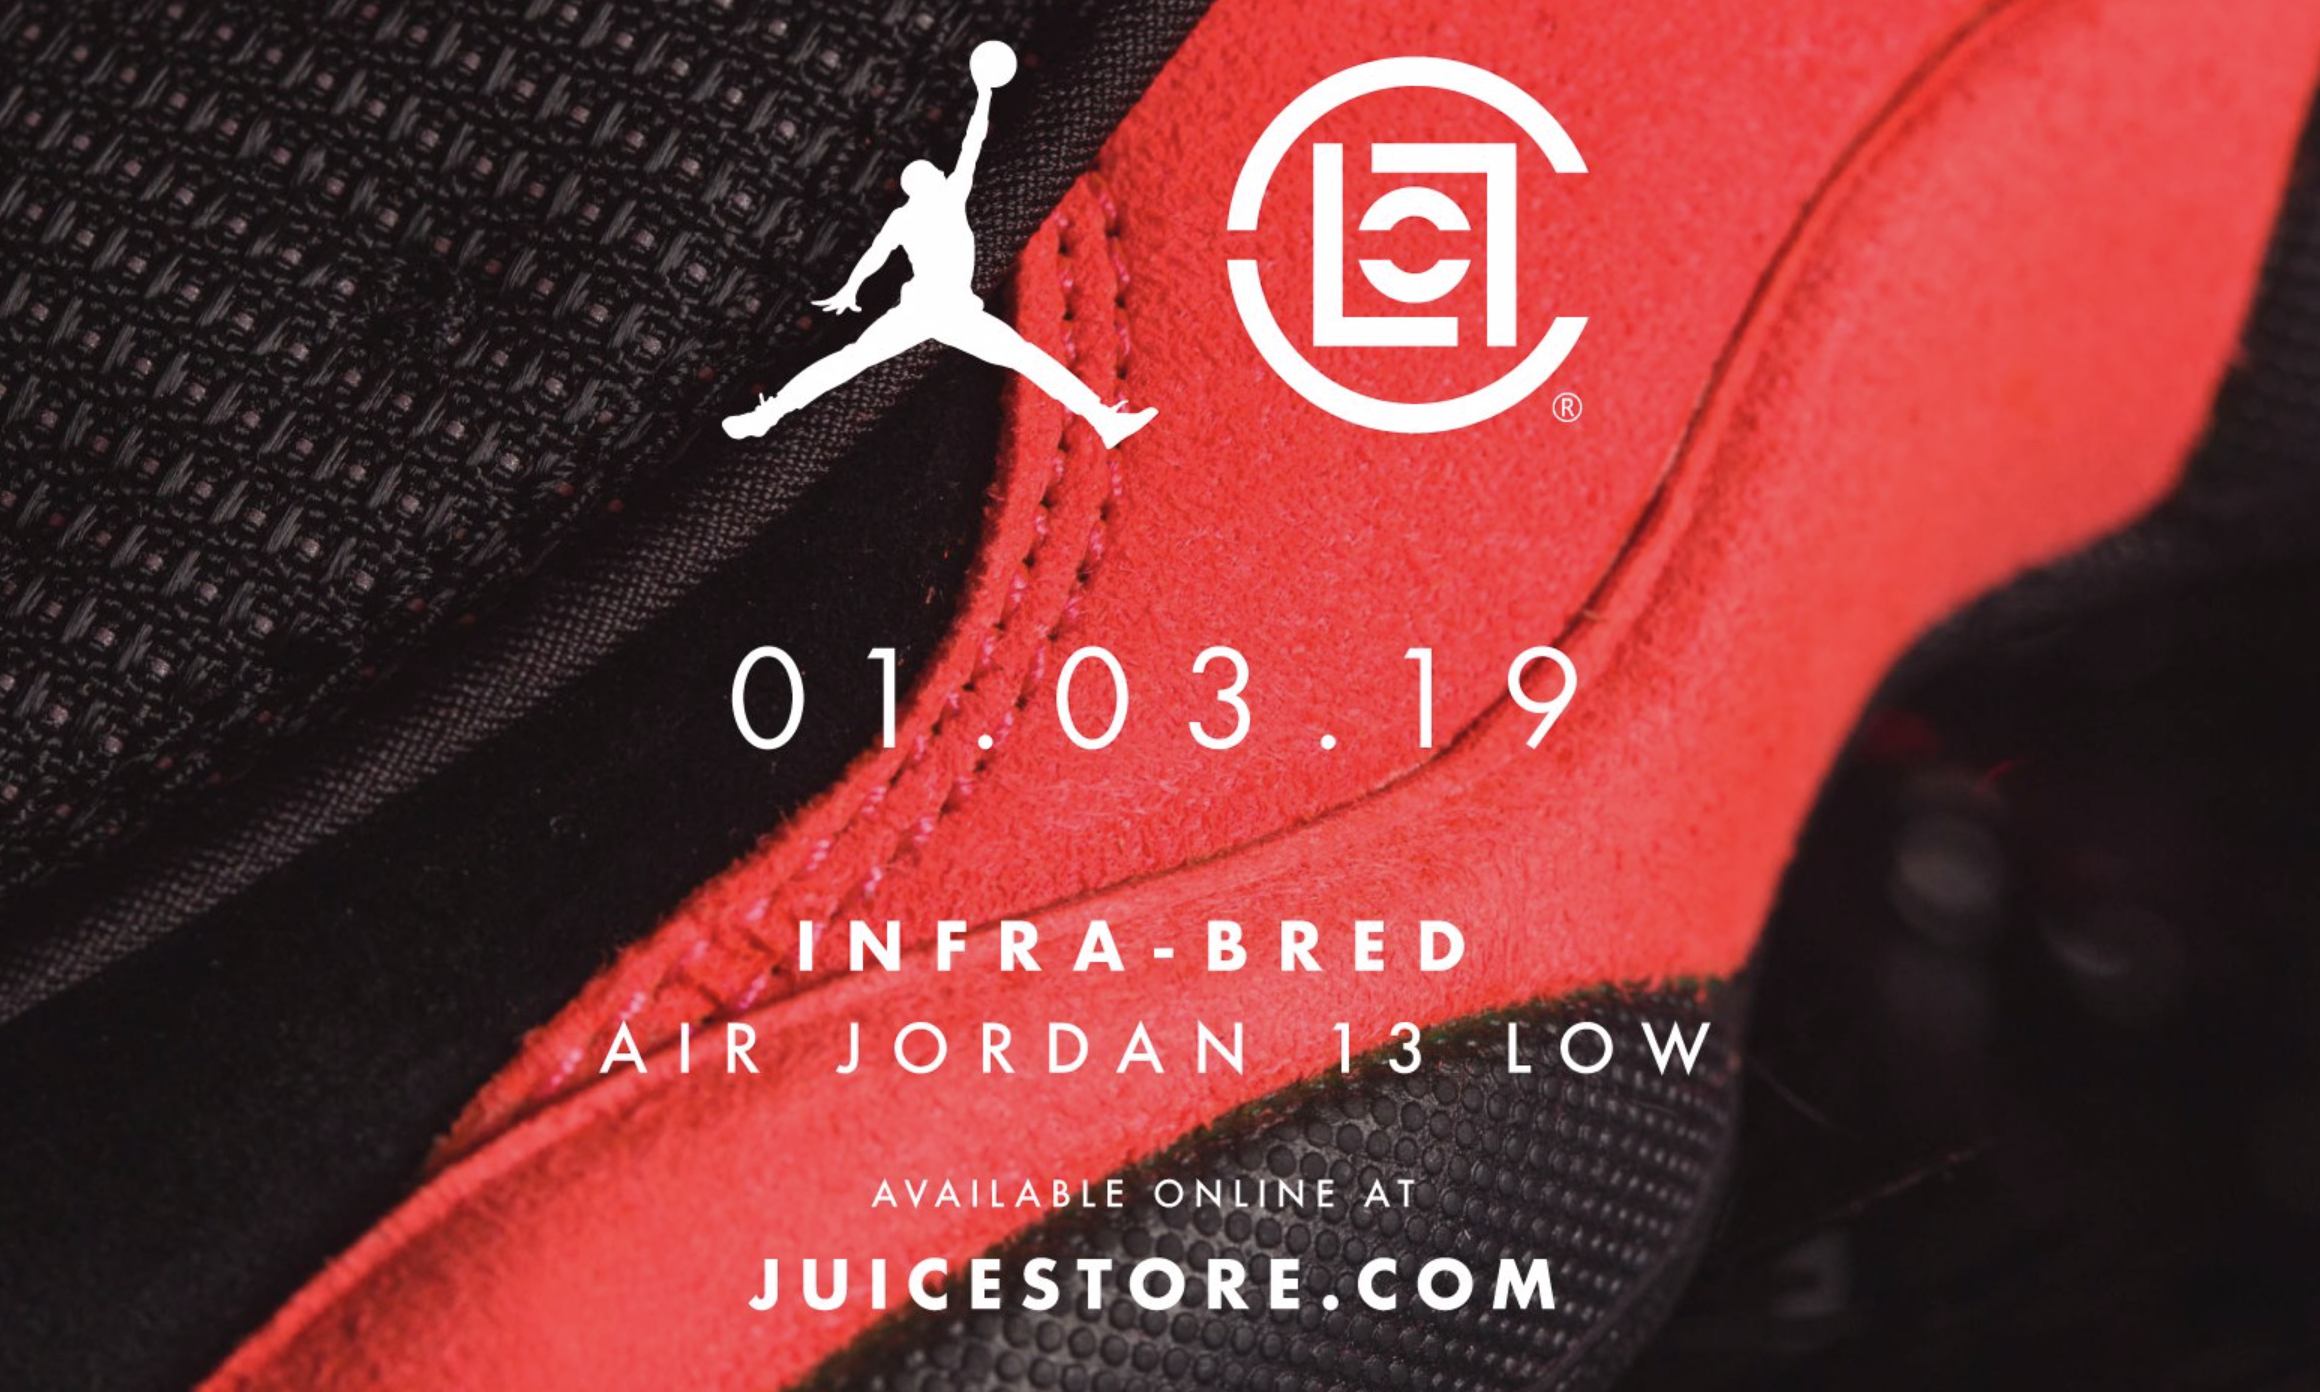 CLOT x Air Jordan XIII “INFRA-BRED” 即将登陆 JUICE 官网发售